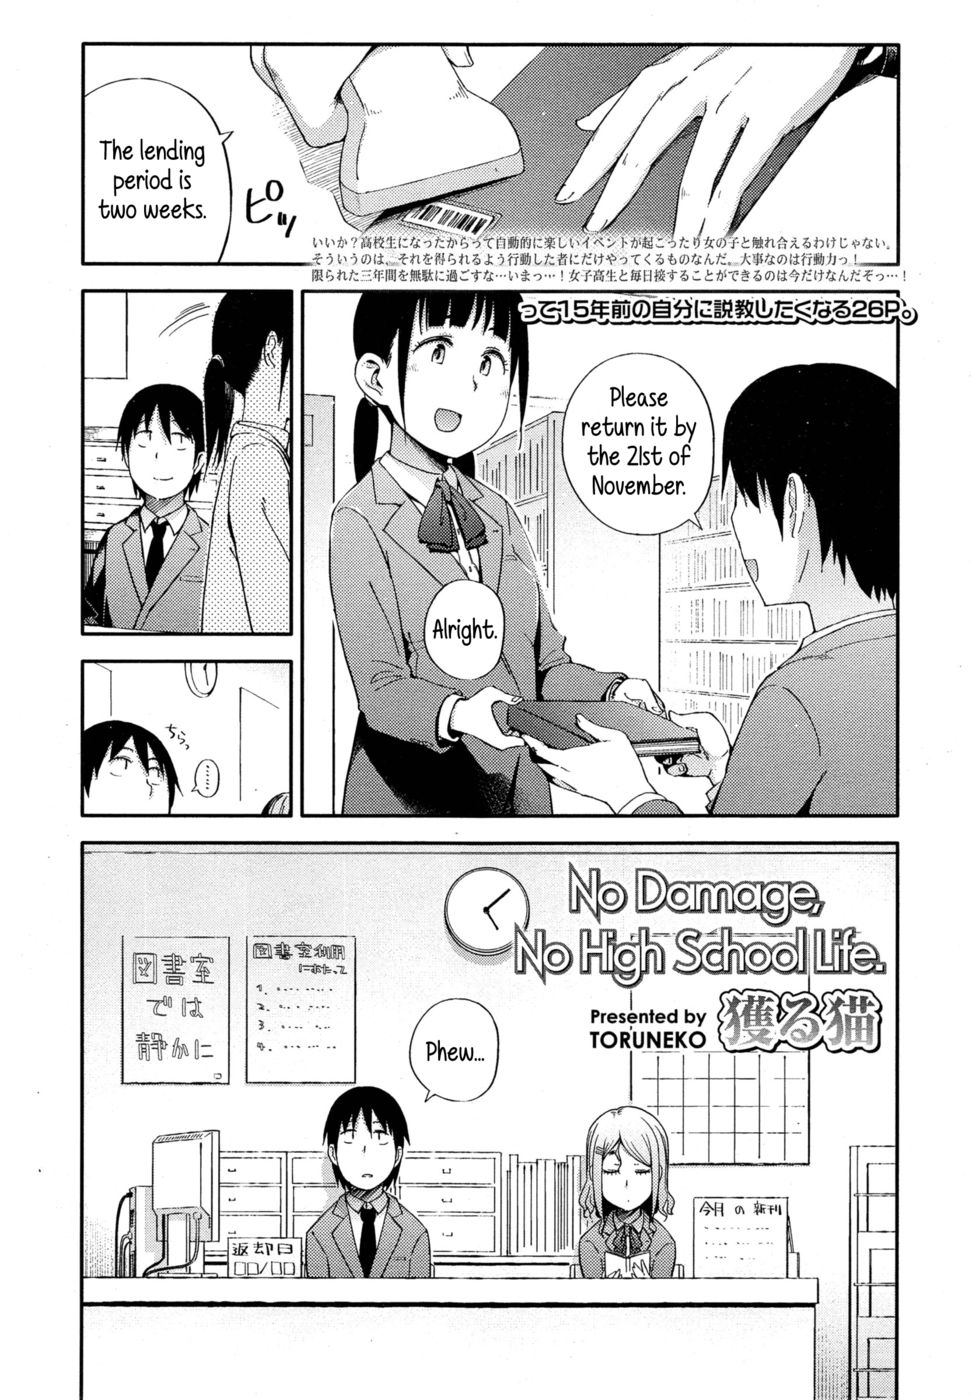 Hentai Manga Comic-No Damage, No High School Life-Read-1